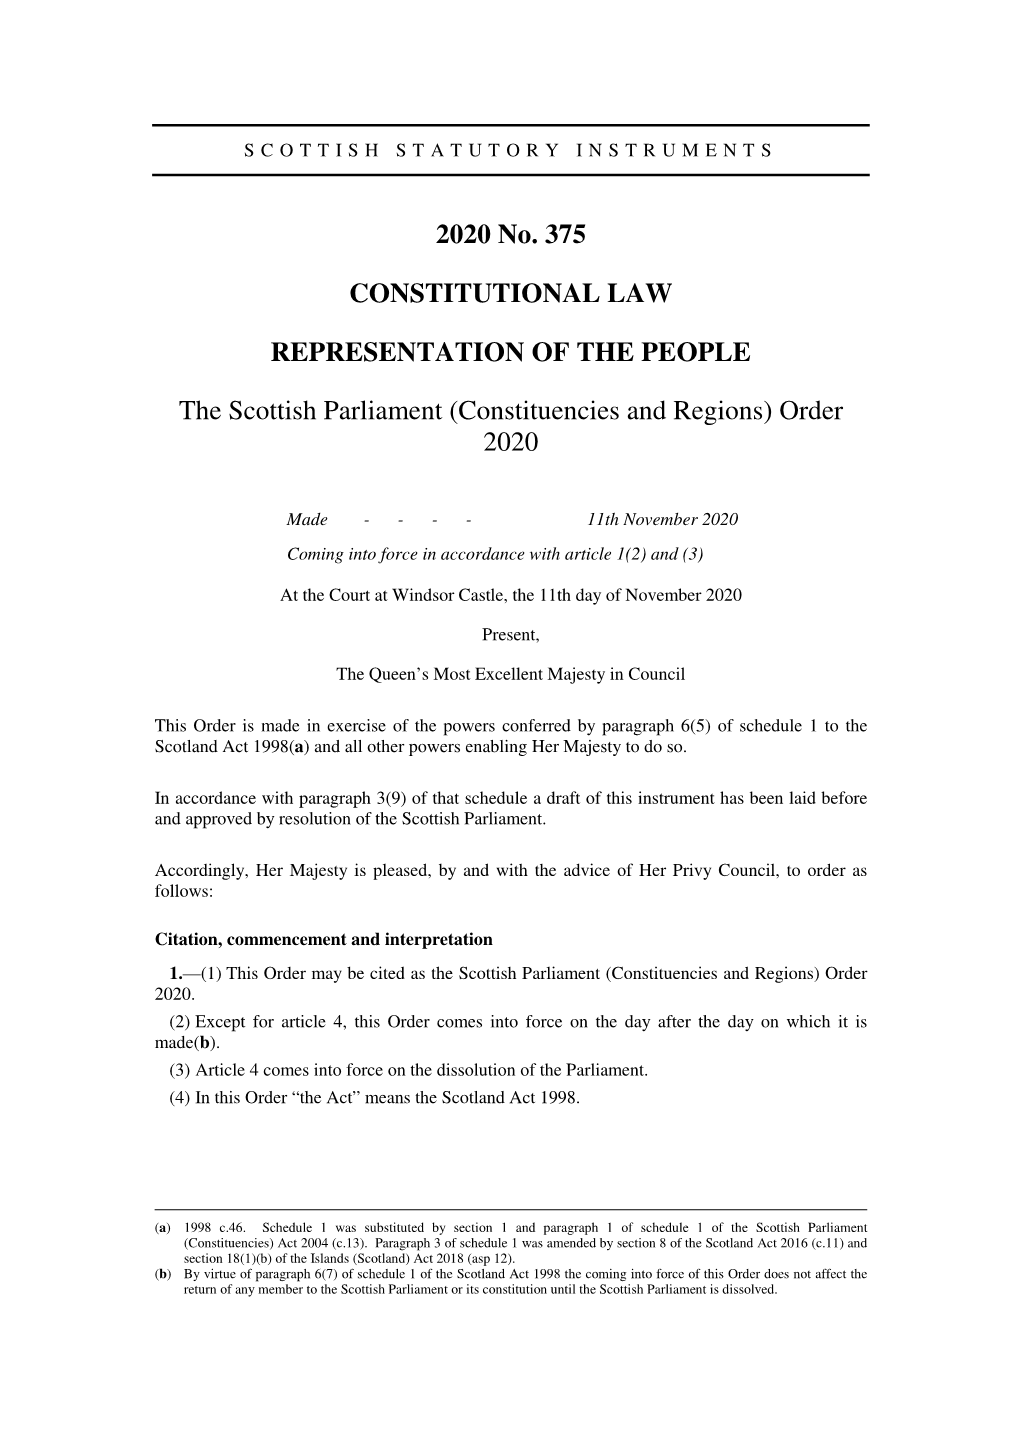 The Scottish Parliament (Constituencies and Regions) Order 2020